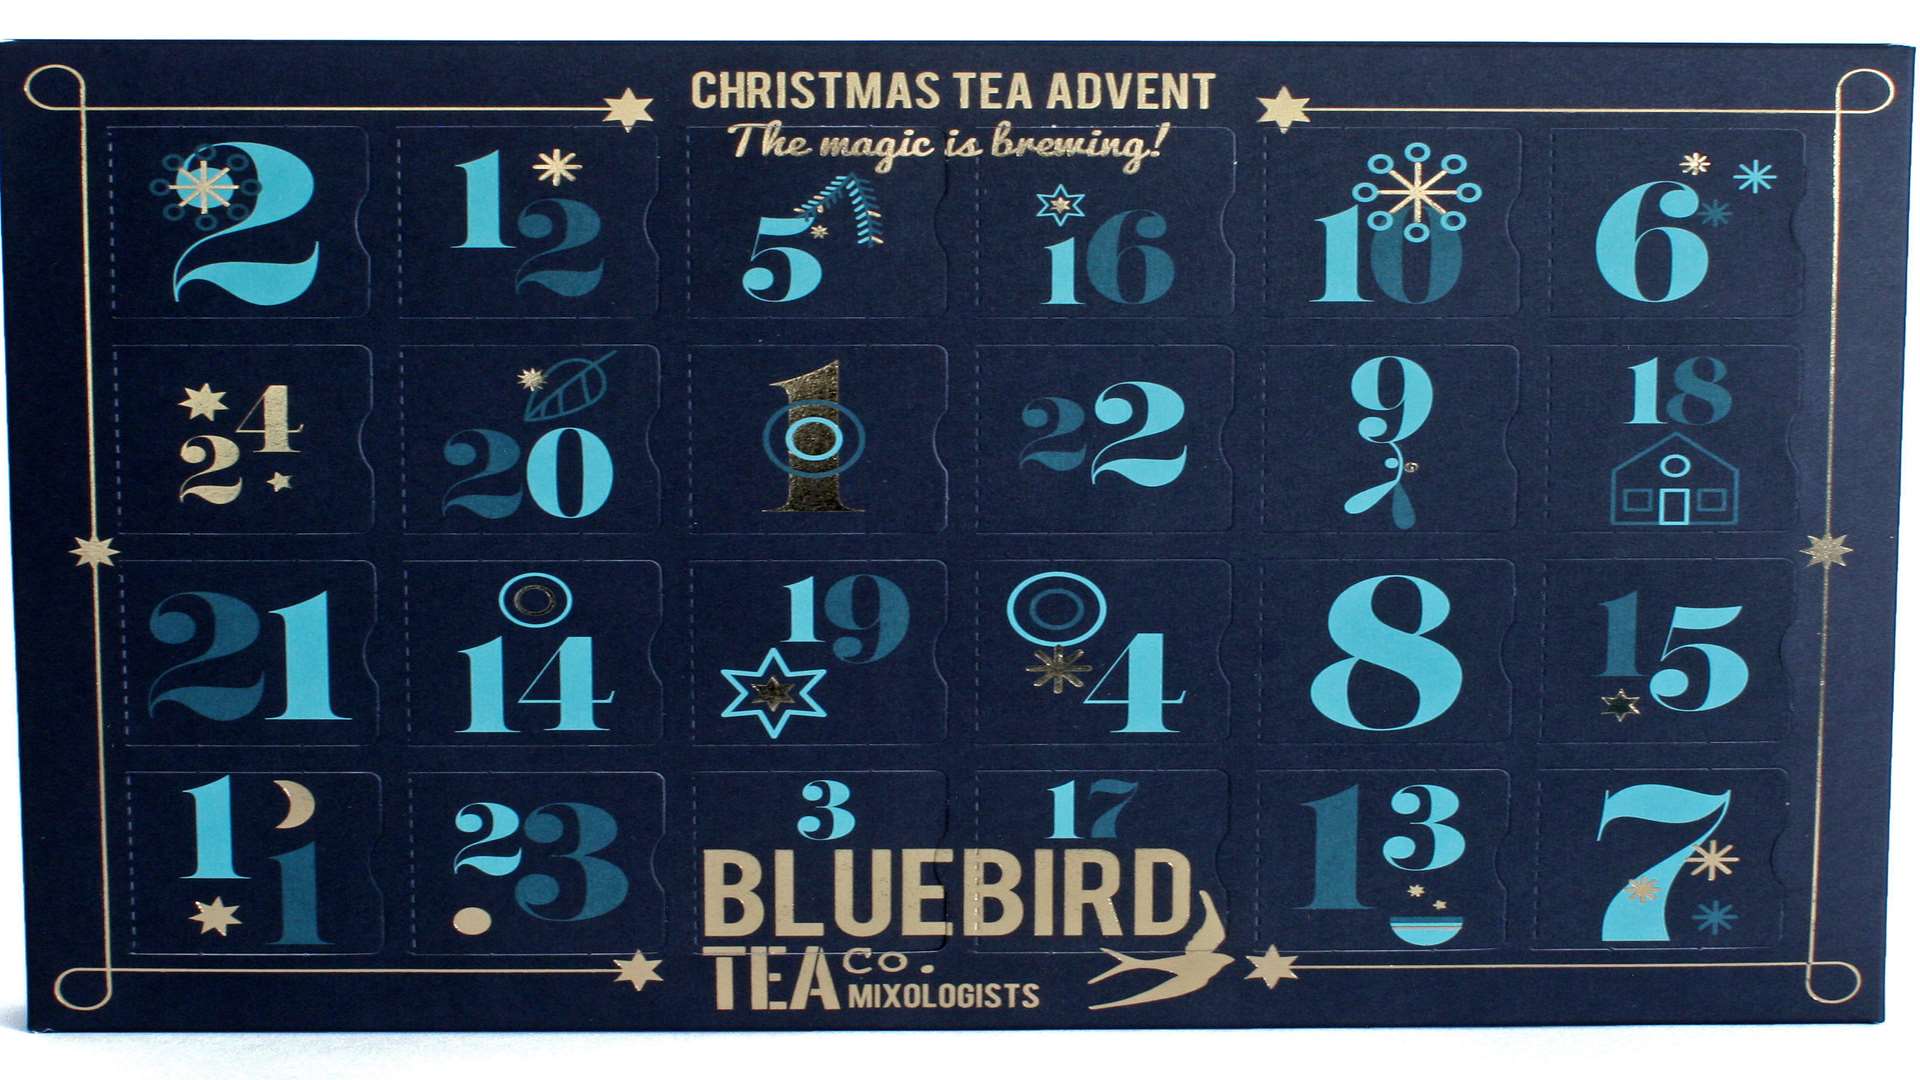 Bluebird Tea Co's Advent Calendar